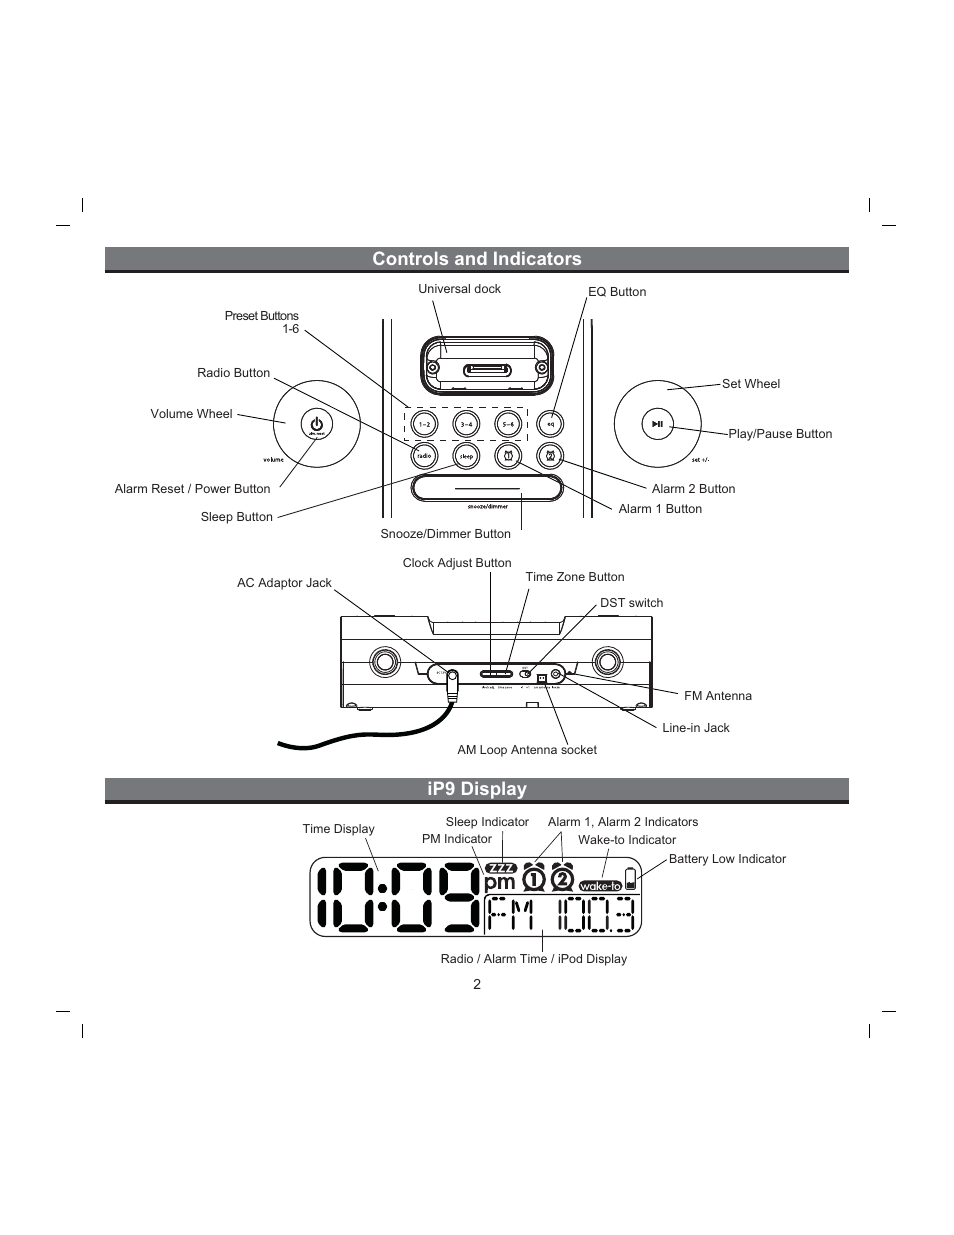 Controls and indicators ip9 display | iHome iP9 User Manual | Page 4 /